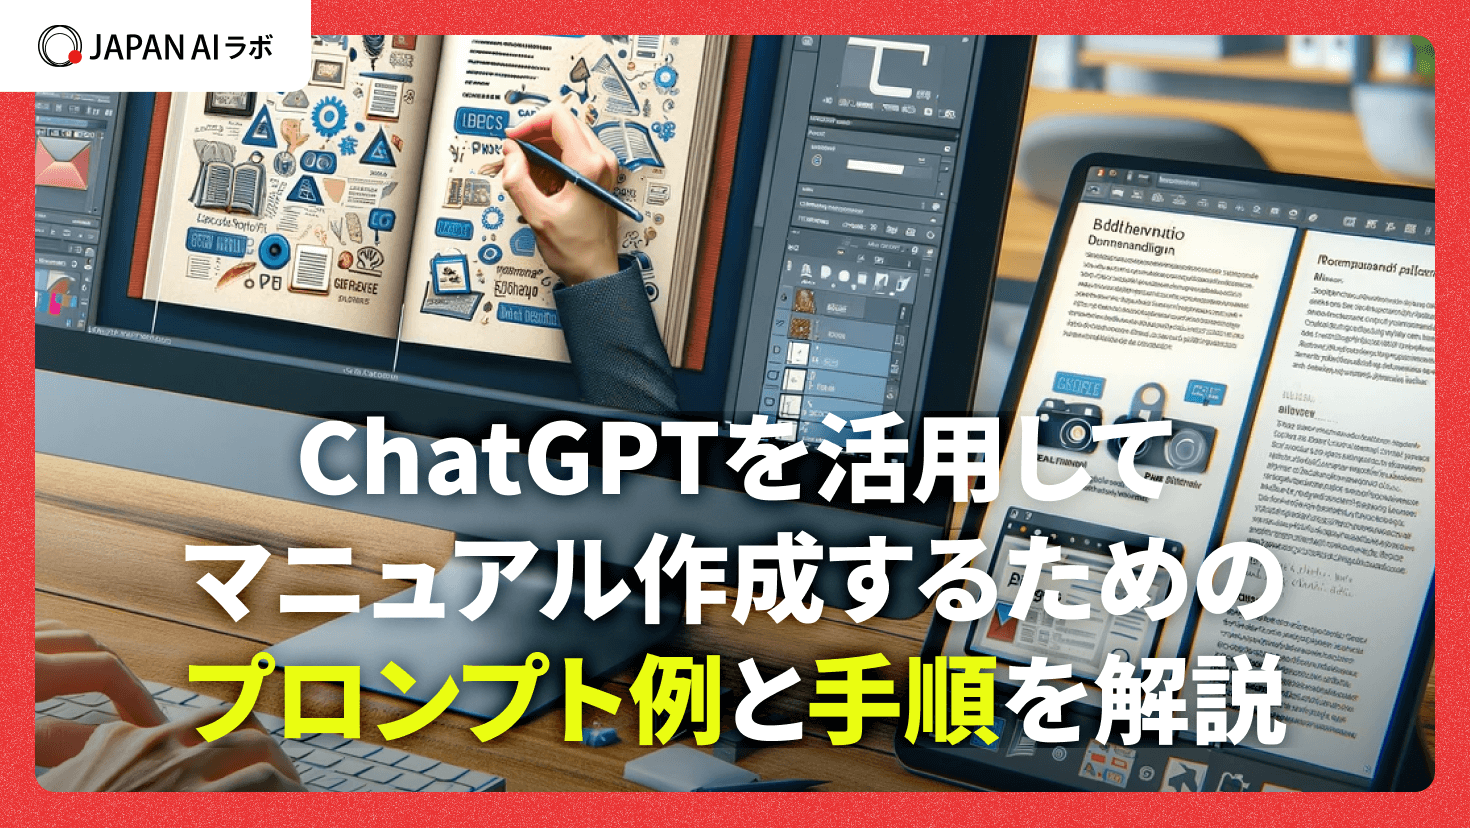 ChatGPTを活用してマニュアル作成するためのプロンプト例と手順を解説